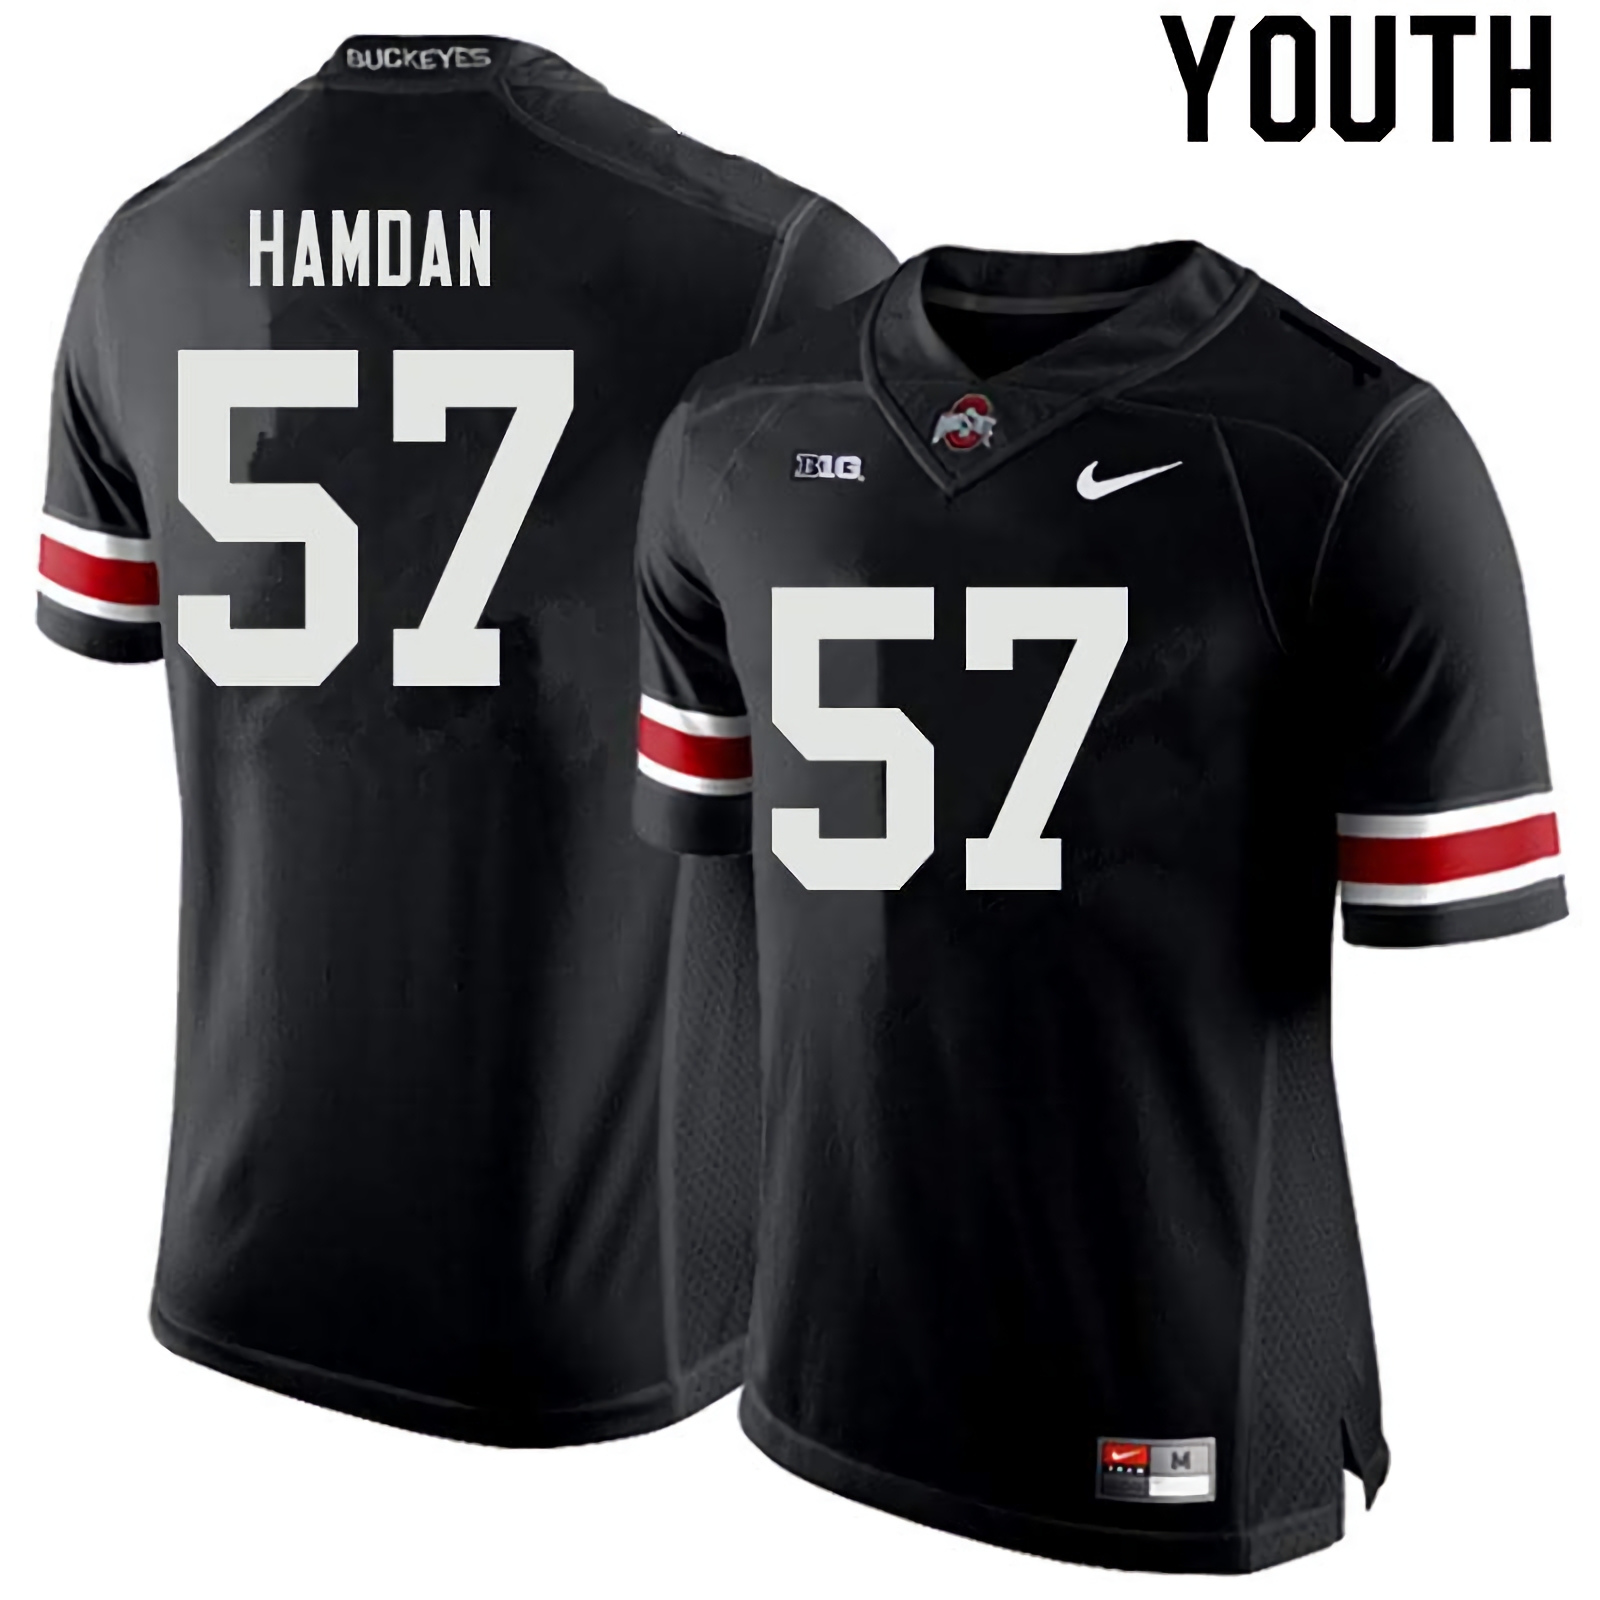 Zaid Hamdan Ohio State Buckeyes Youth NCAA #57 Nike Black College Stitched Football Jersey MOK1356DK